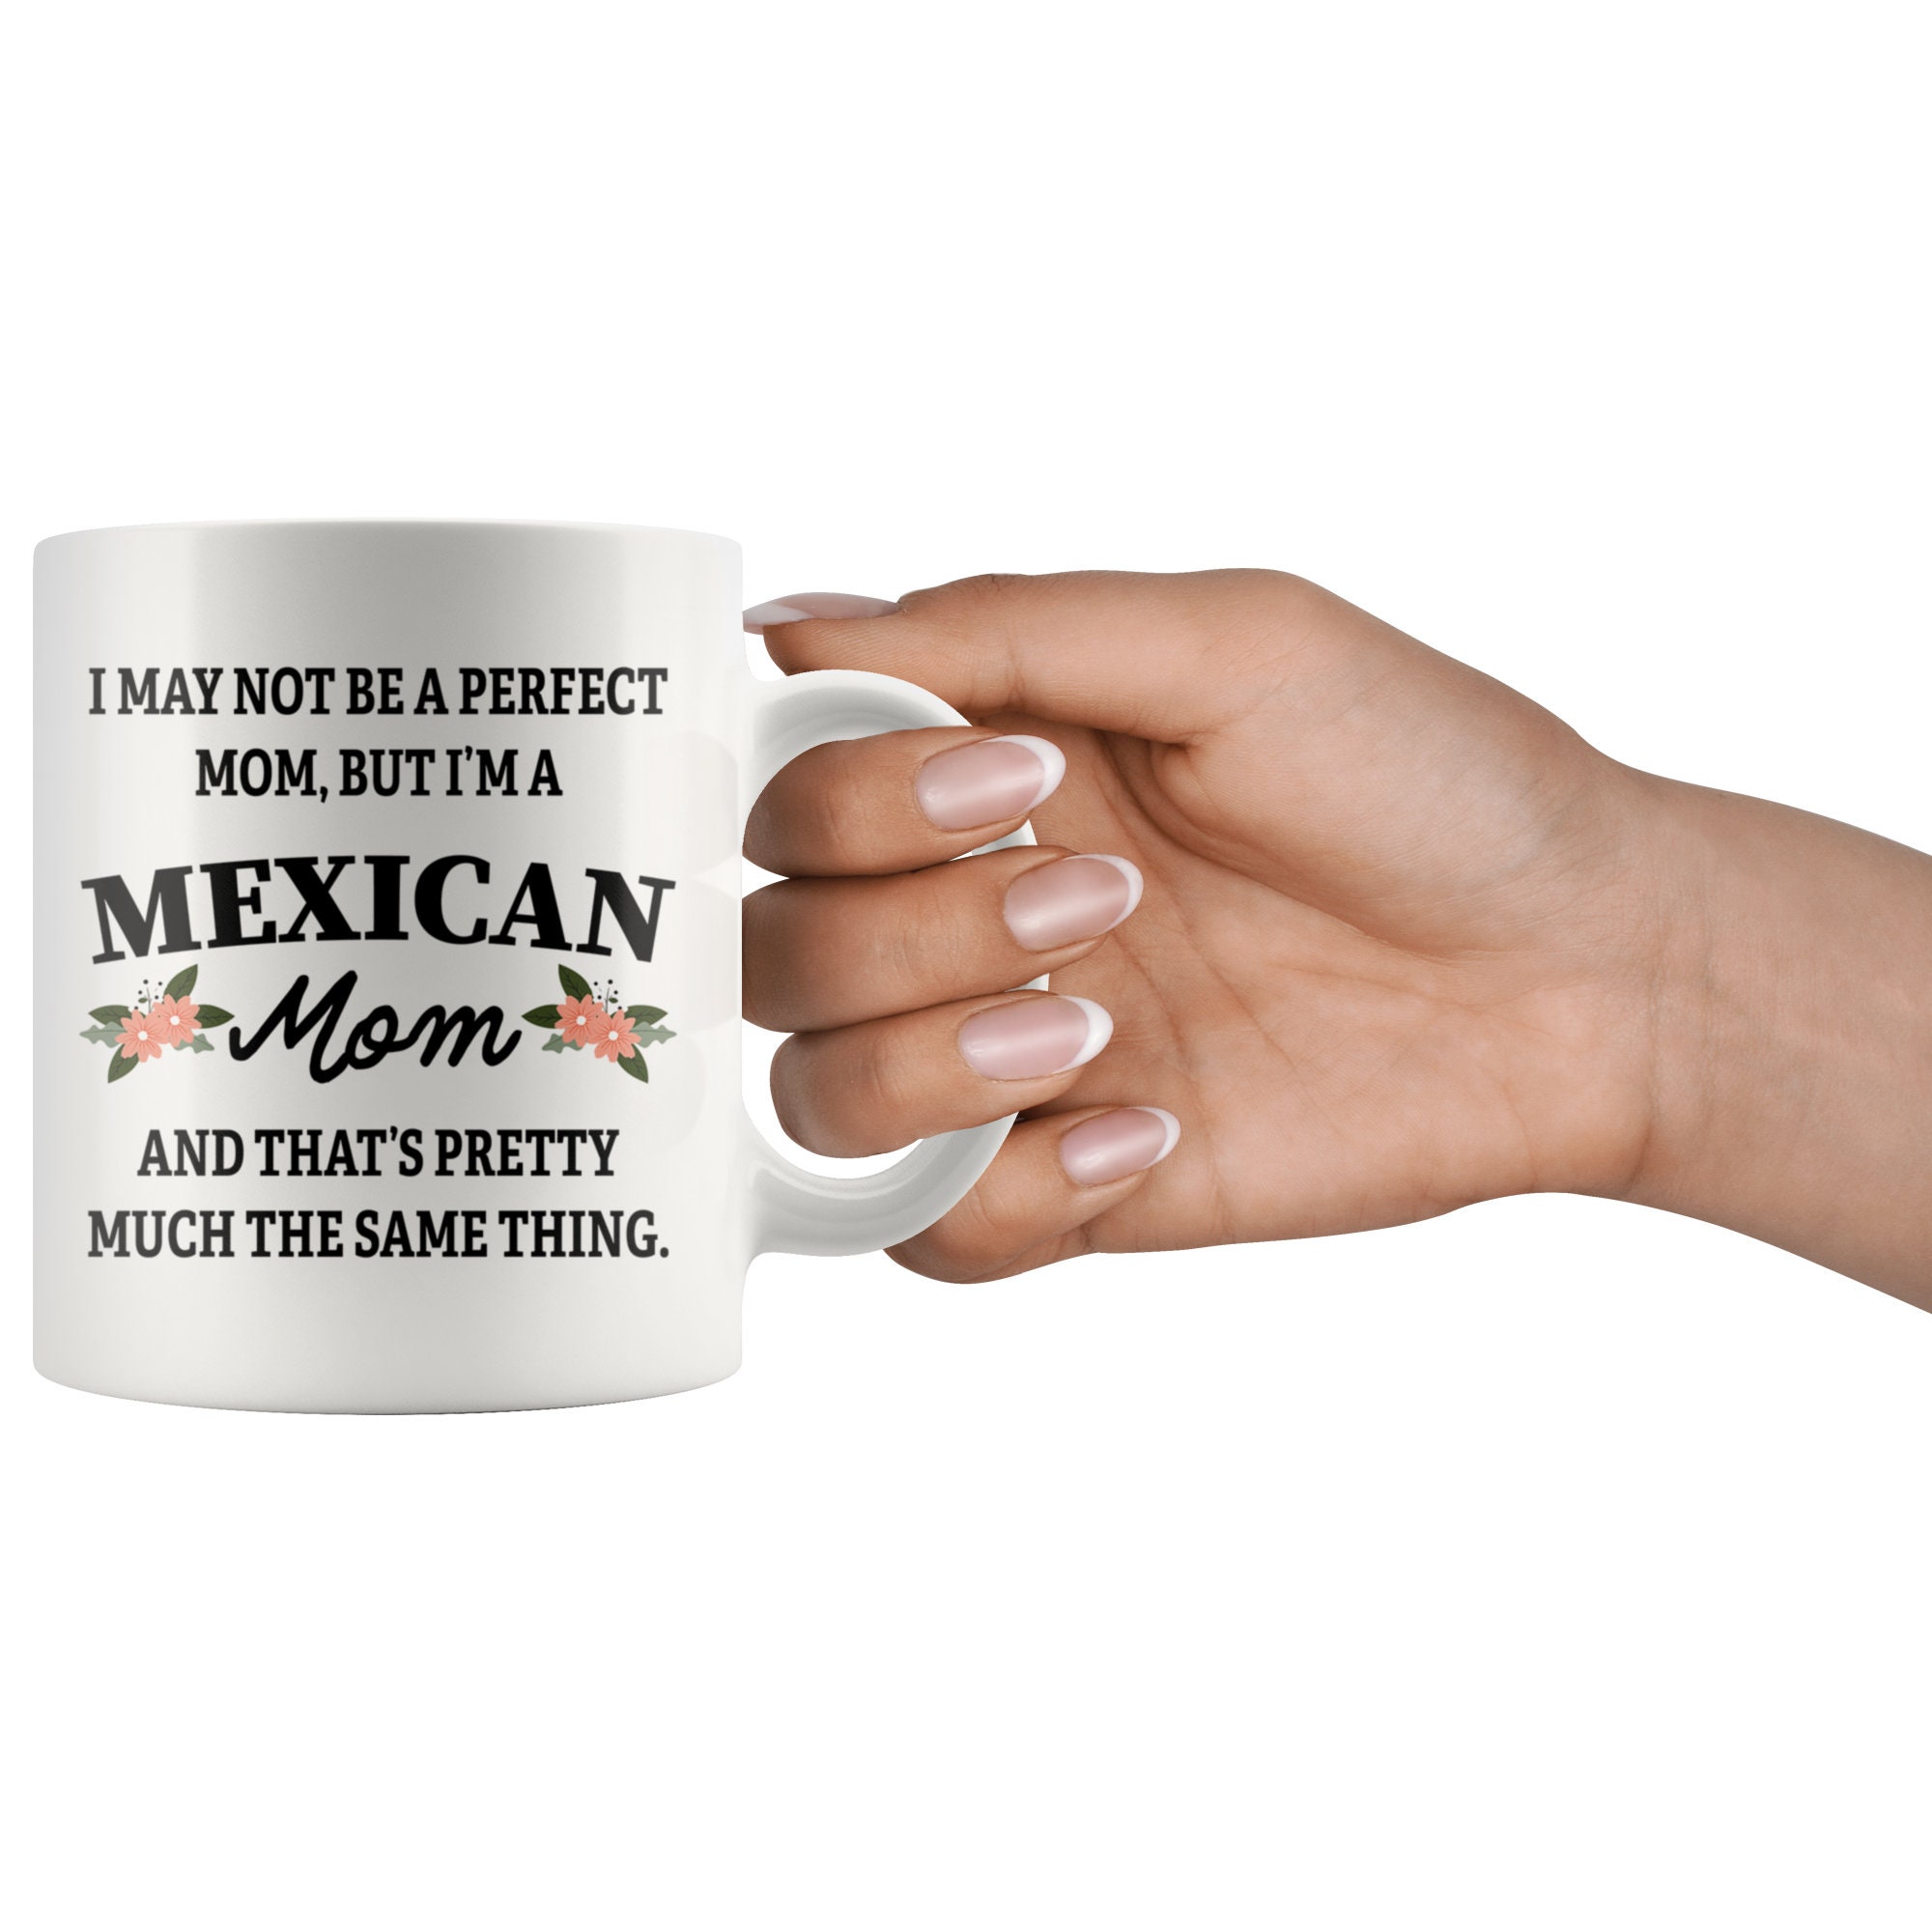 Mexican Mom Mug - World�s Greatest Mexican Mom - Best Birthday